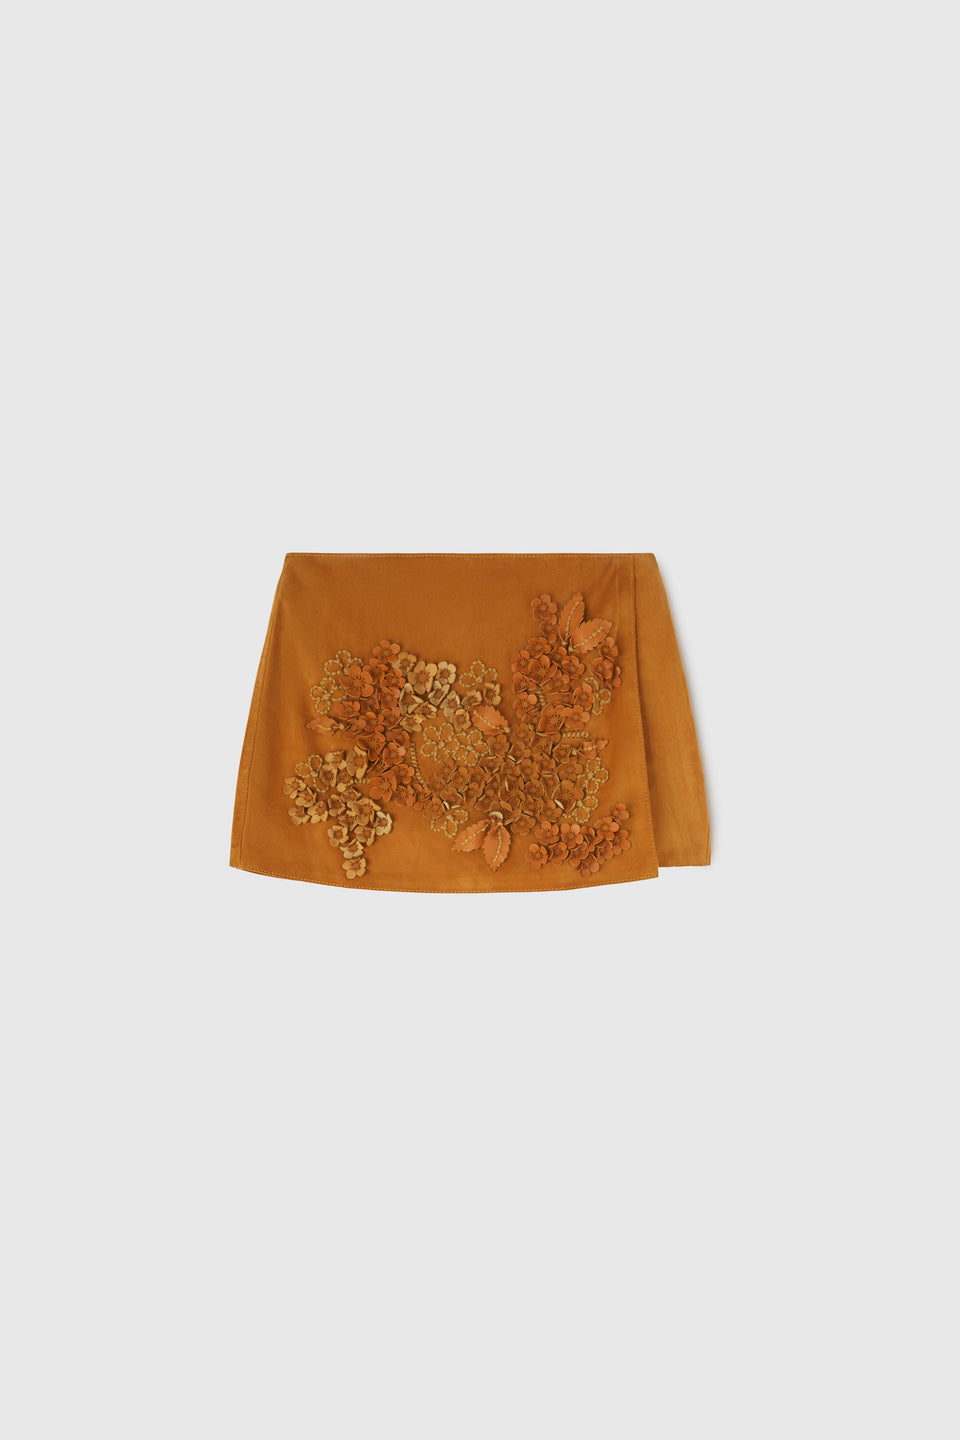 Brown suede mini skirt